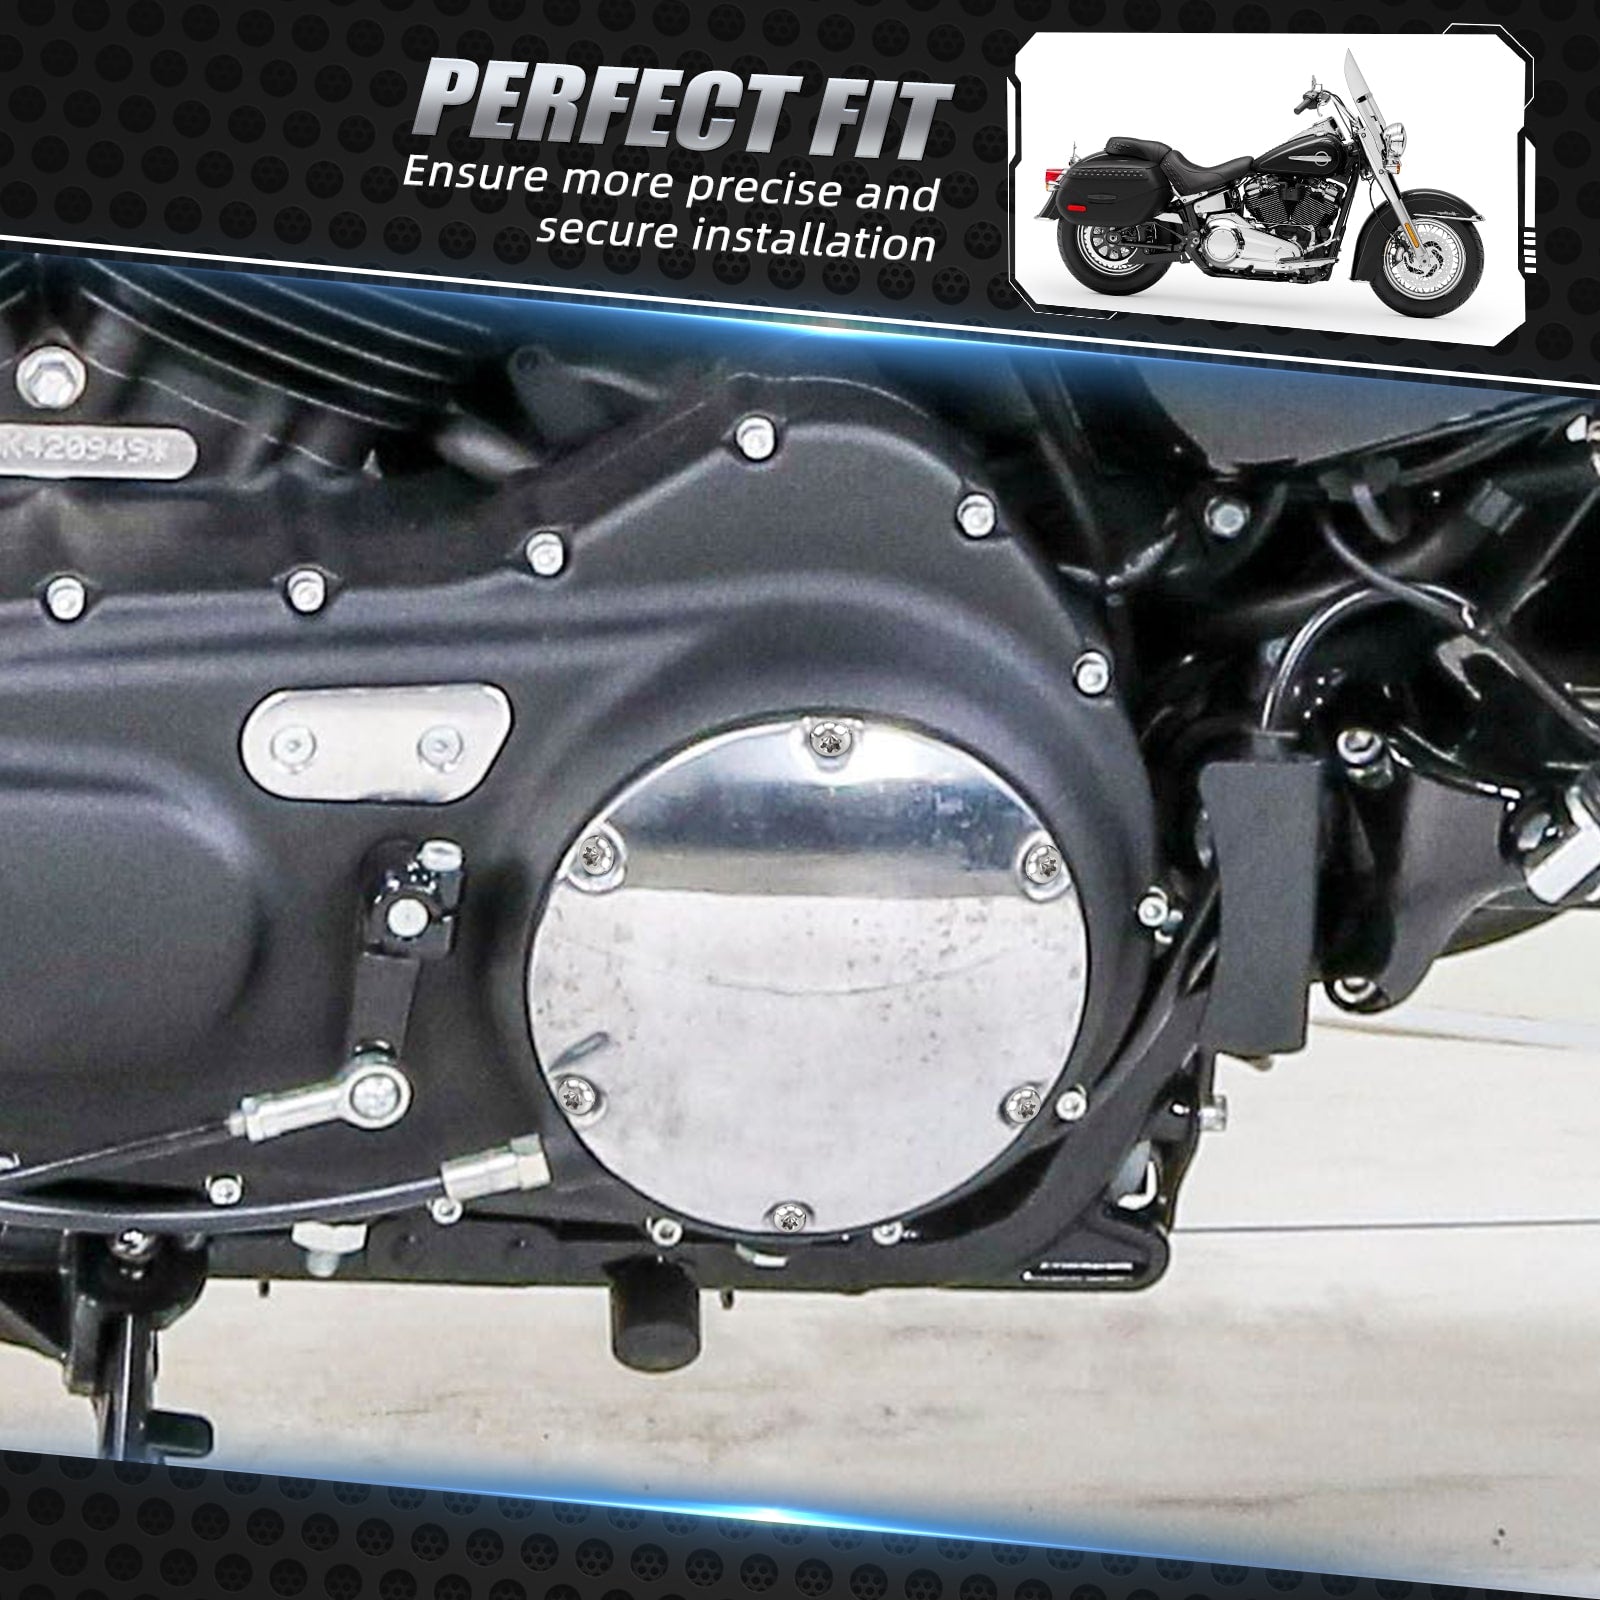 Titanium Alloy Derby Cover Screws Kit for Harley Davidson Sportster models